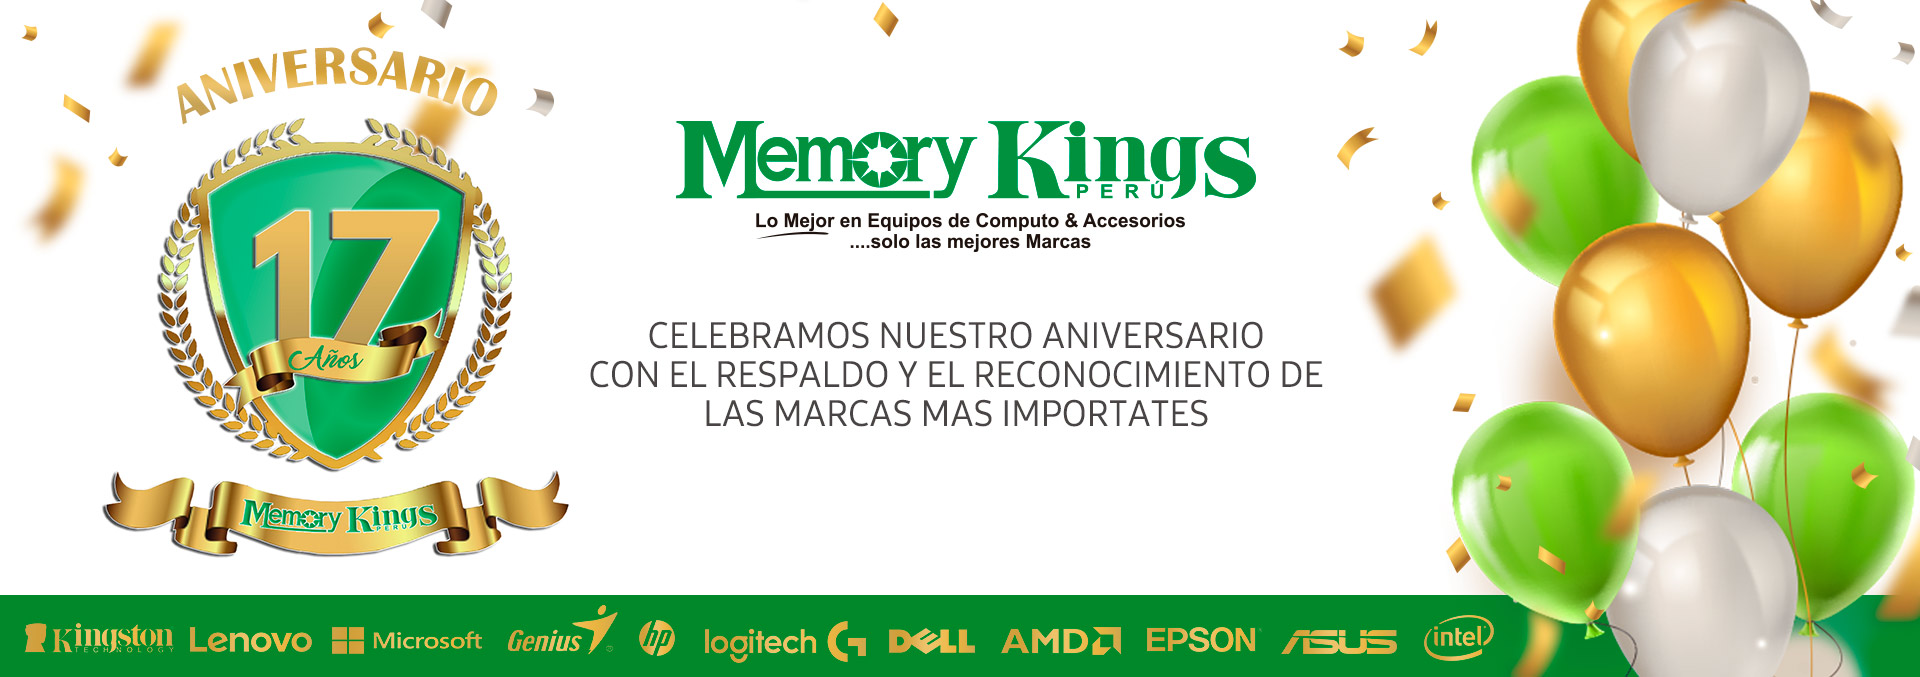 Memory Kings 17 Aniversario